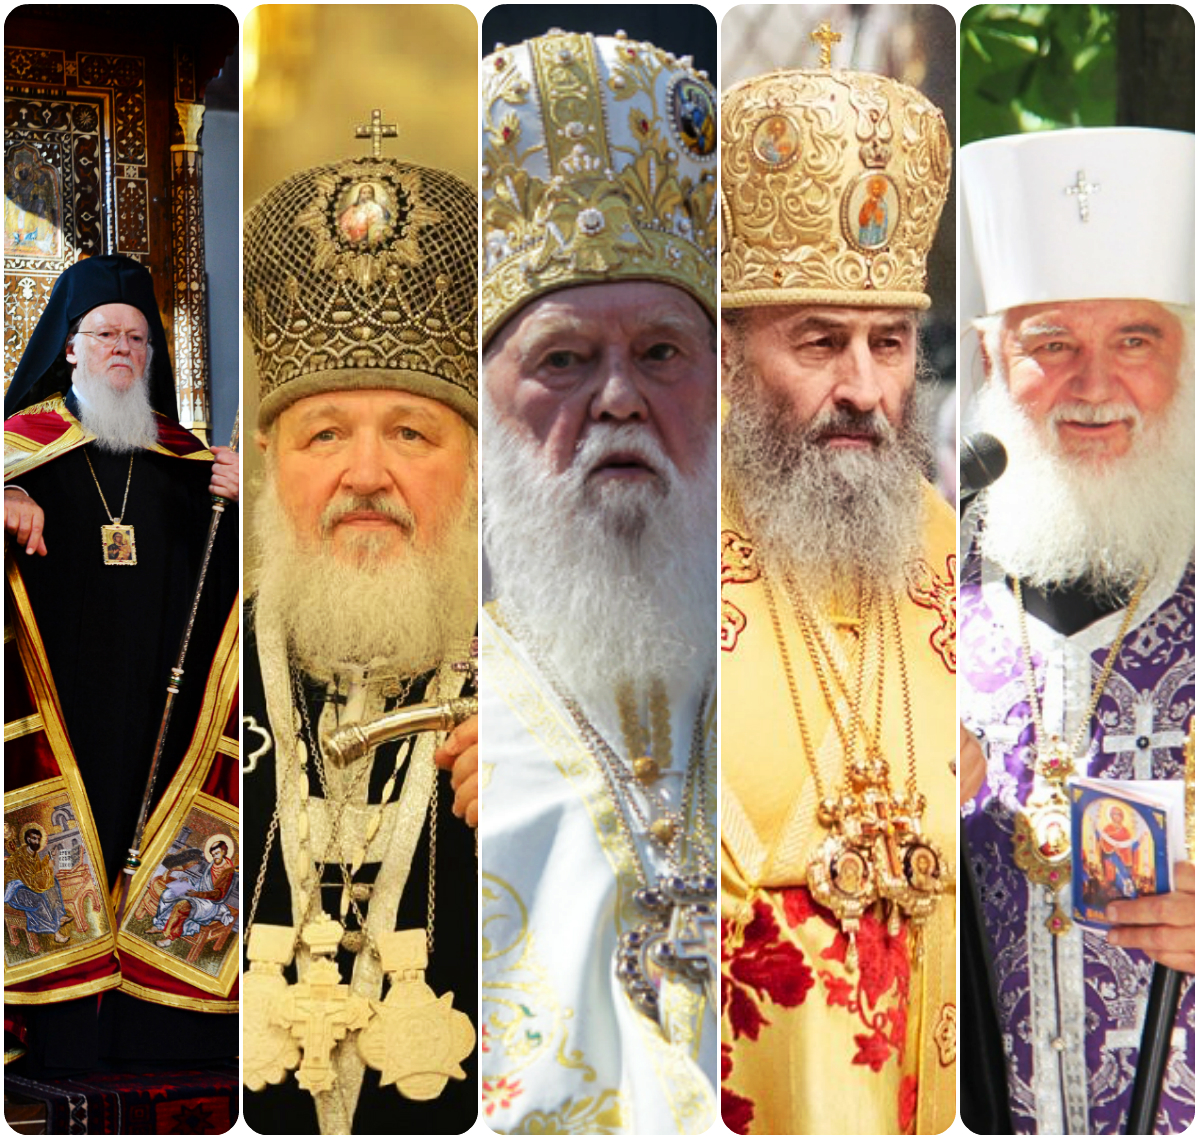 The Armenian Orthodox Conciliar Model may help Resolve Ukrainian Orthodox Schism